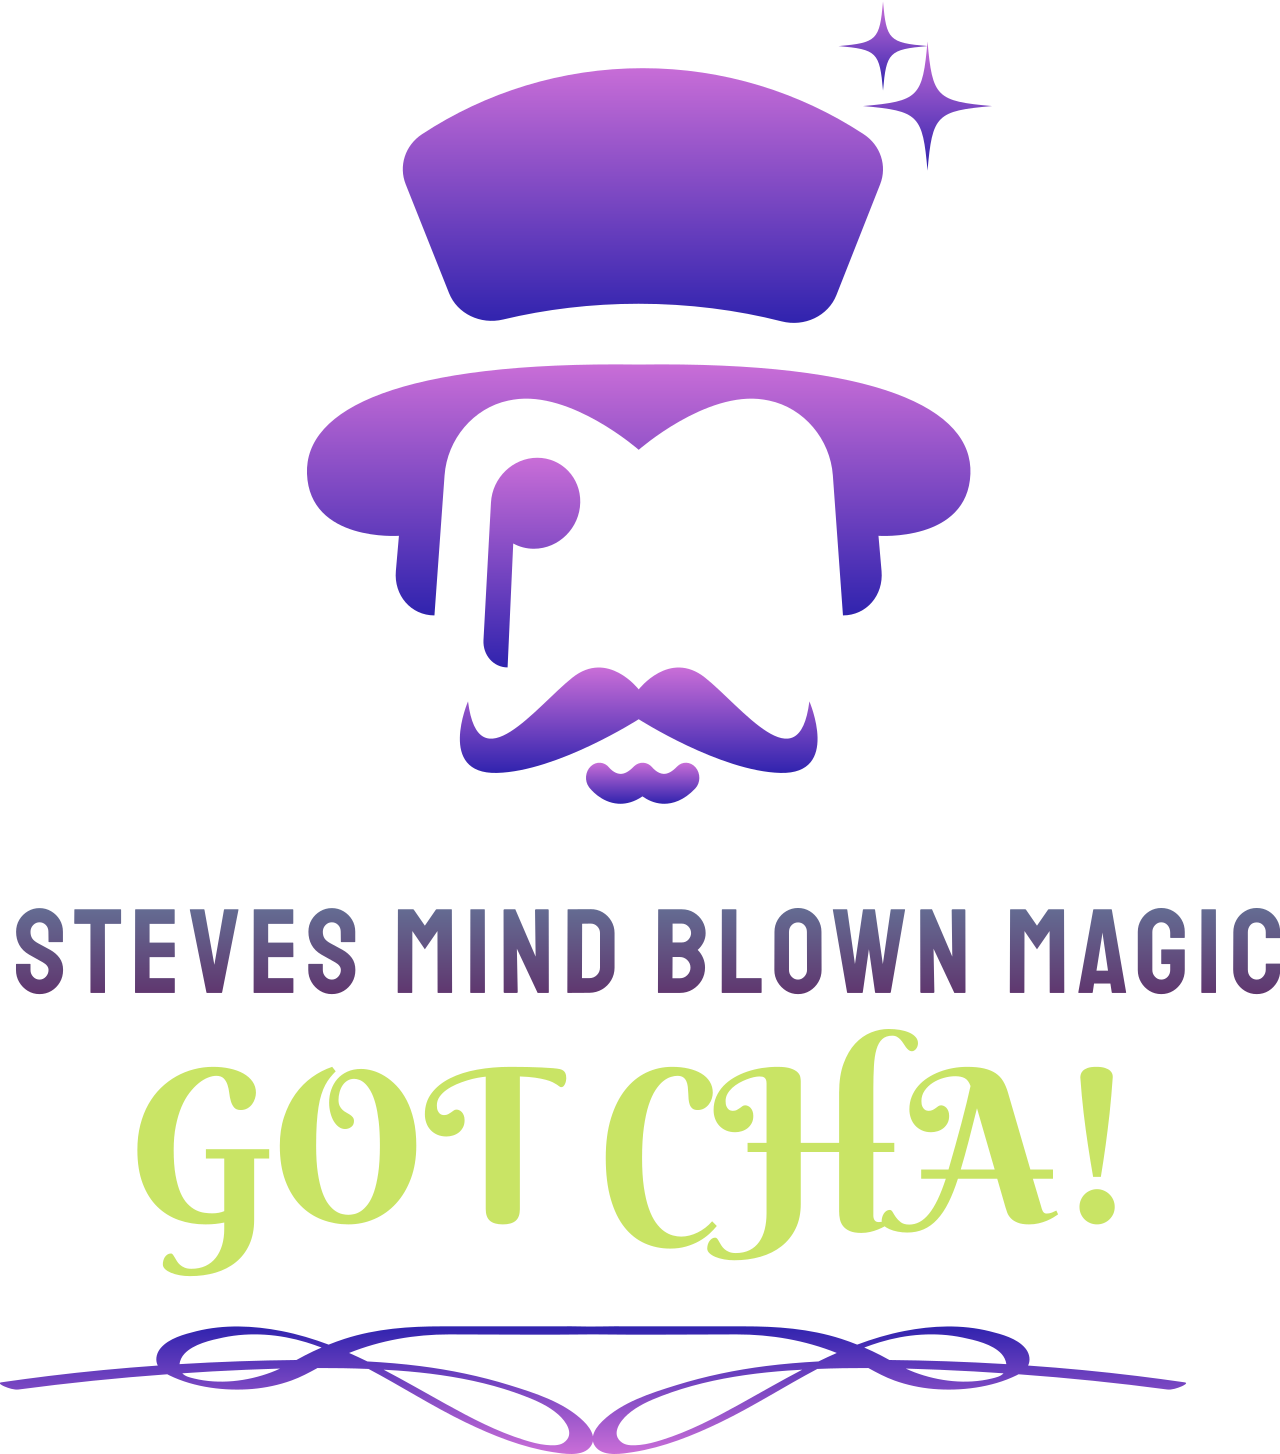 Steves Mind Blown Magic's logo